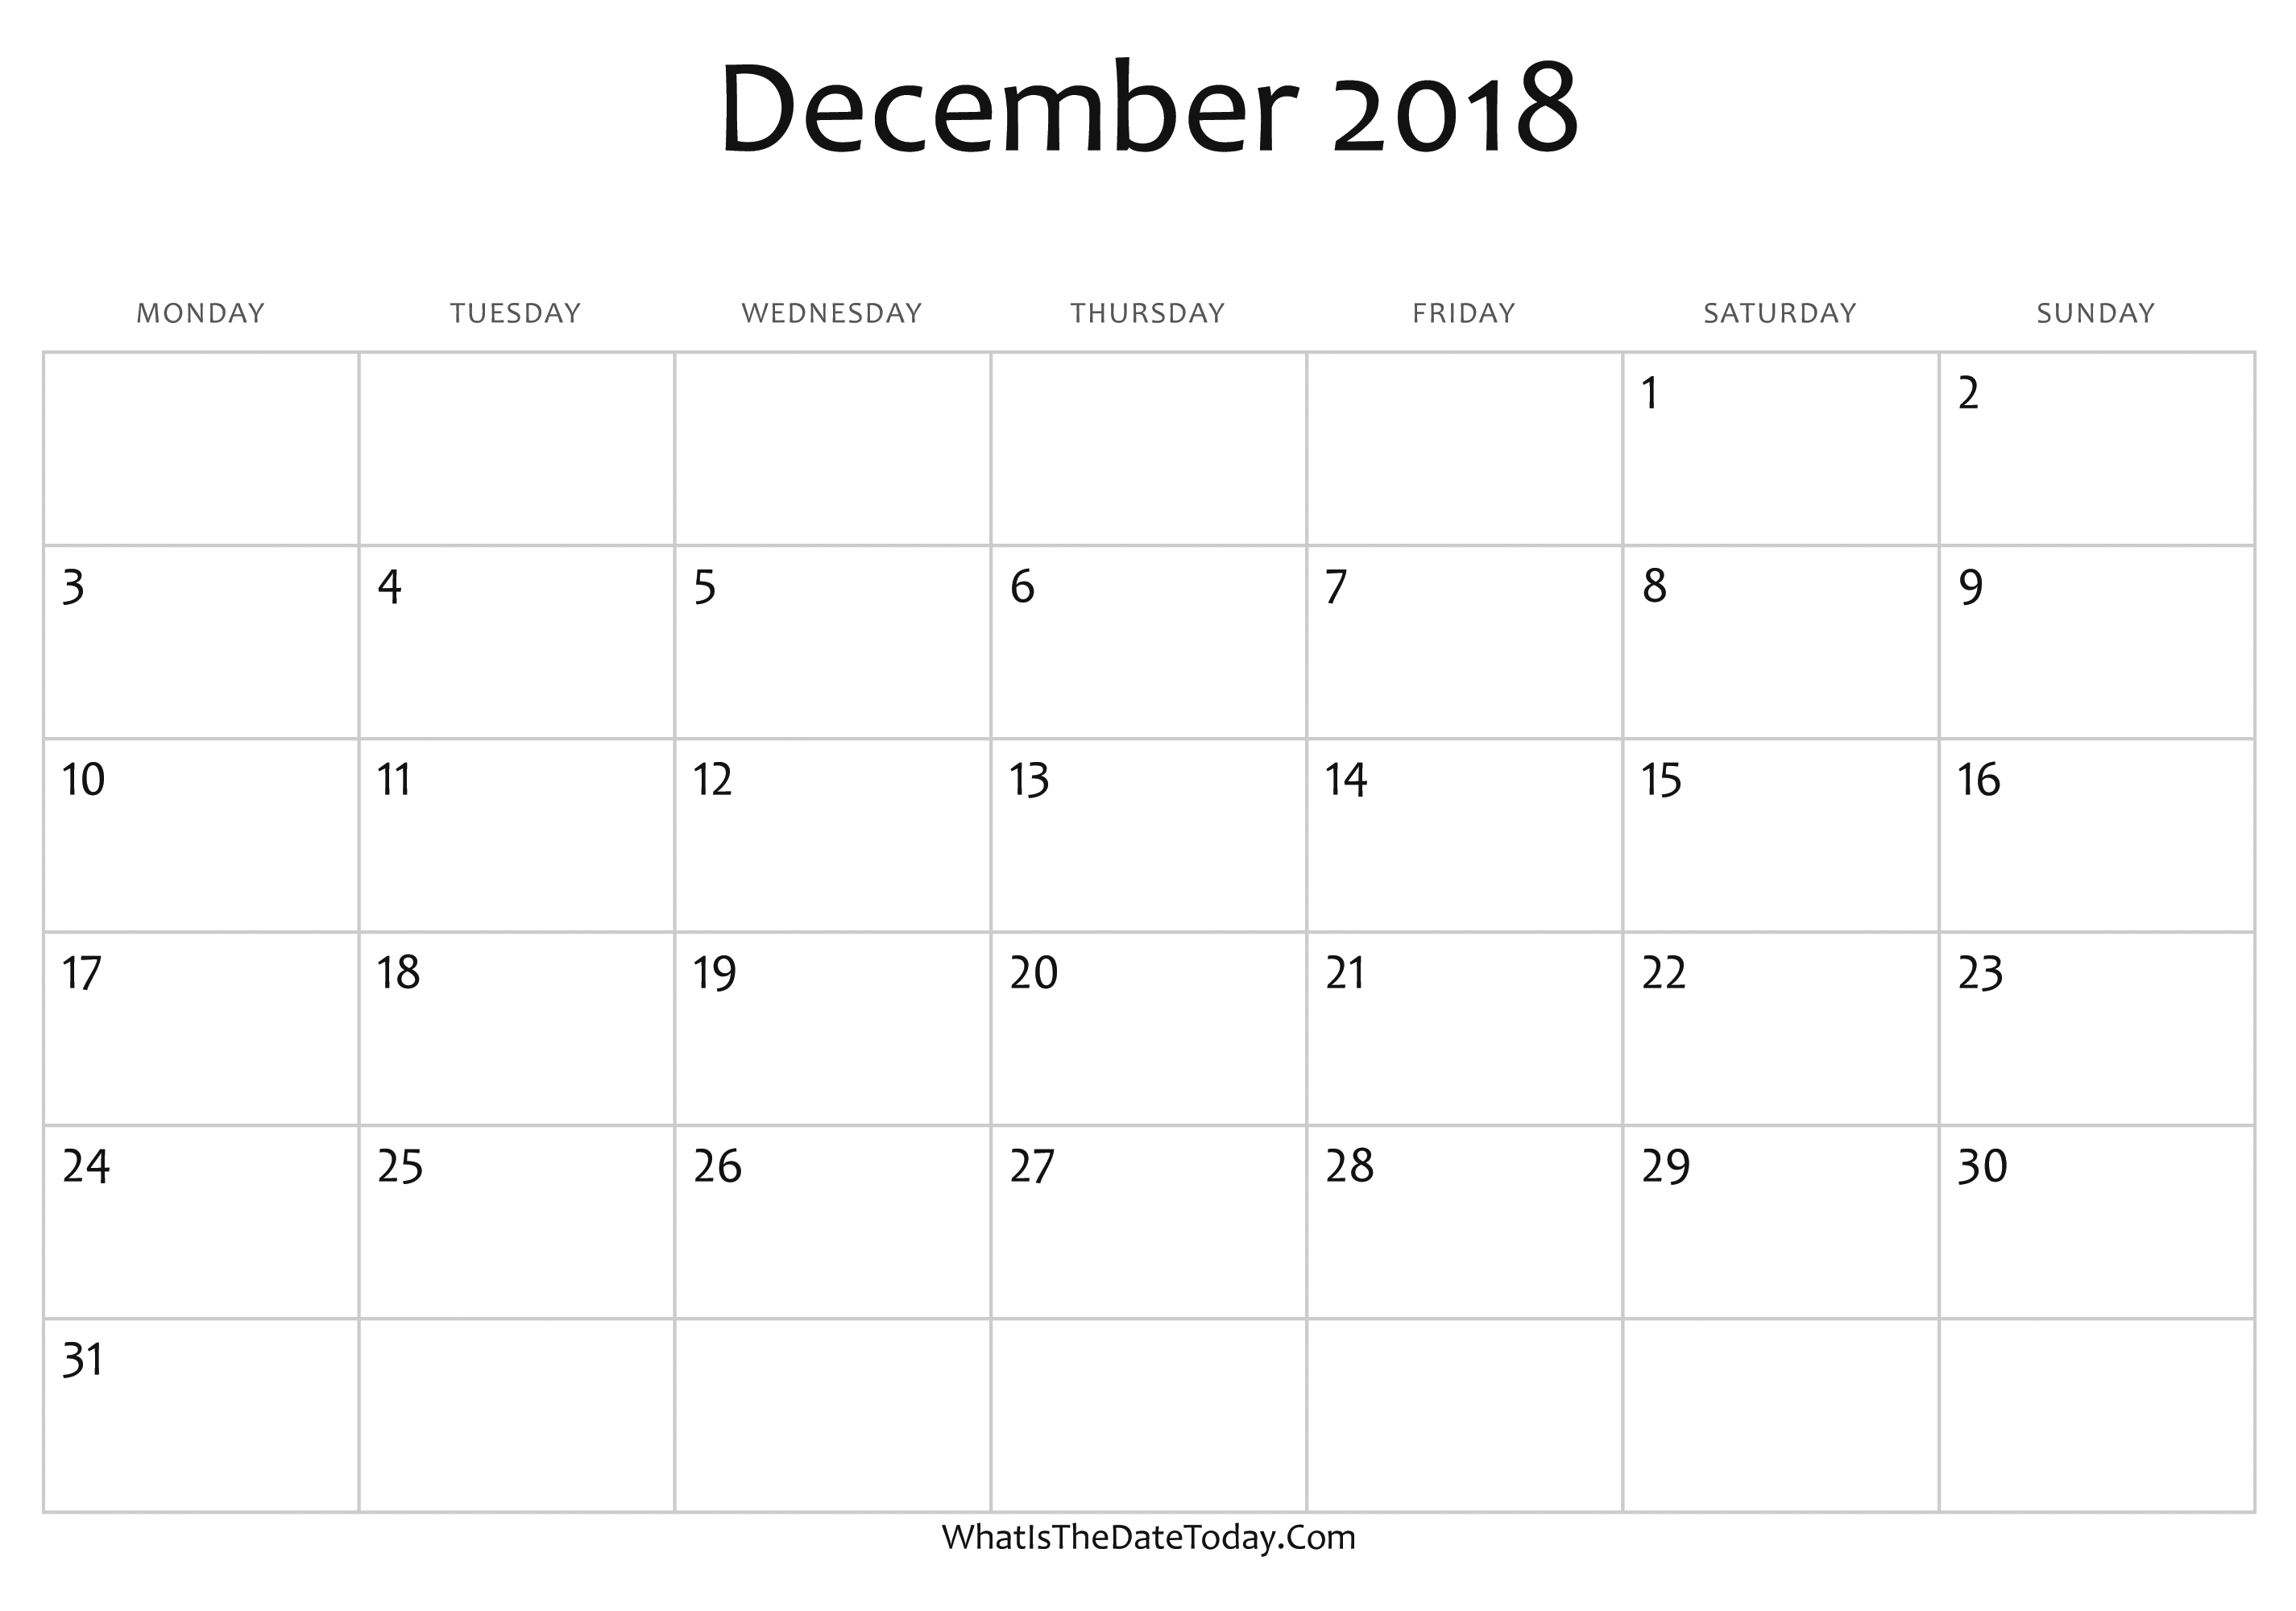 blank-december-calendar-2018-editable-whatisthedatetoday-com